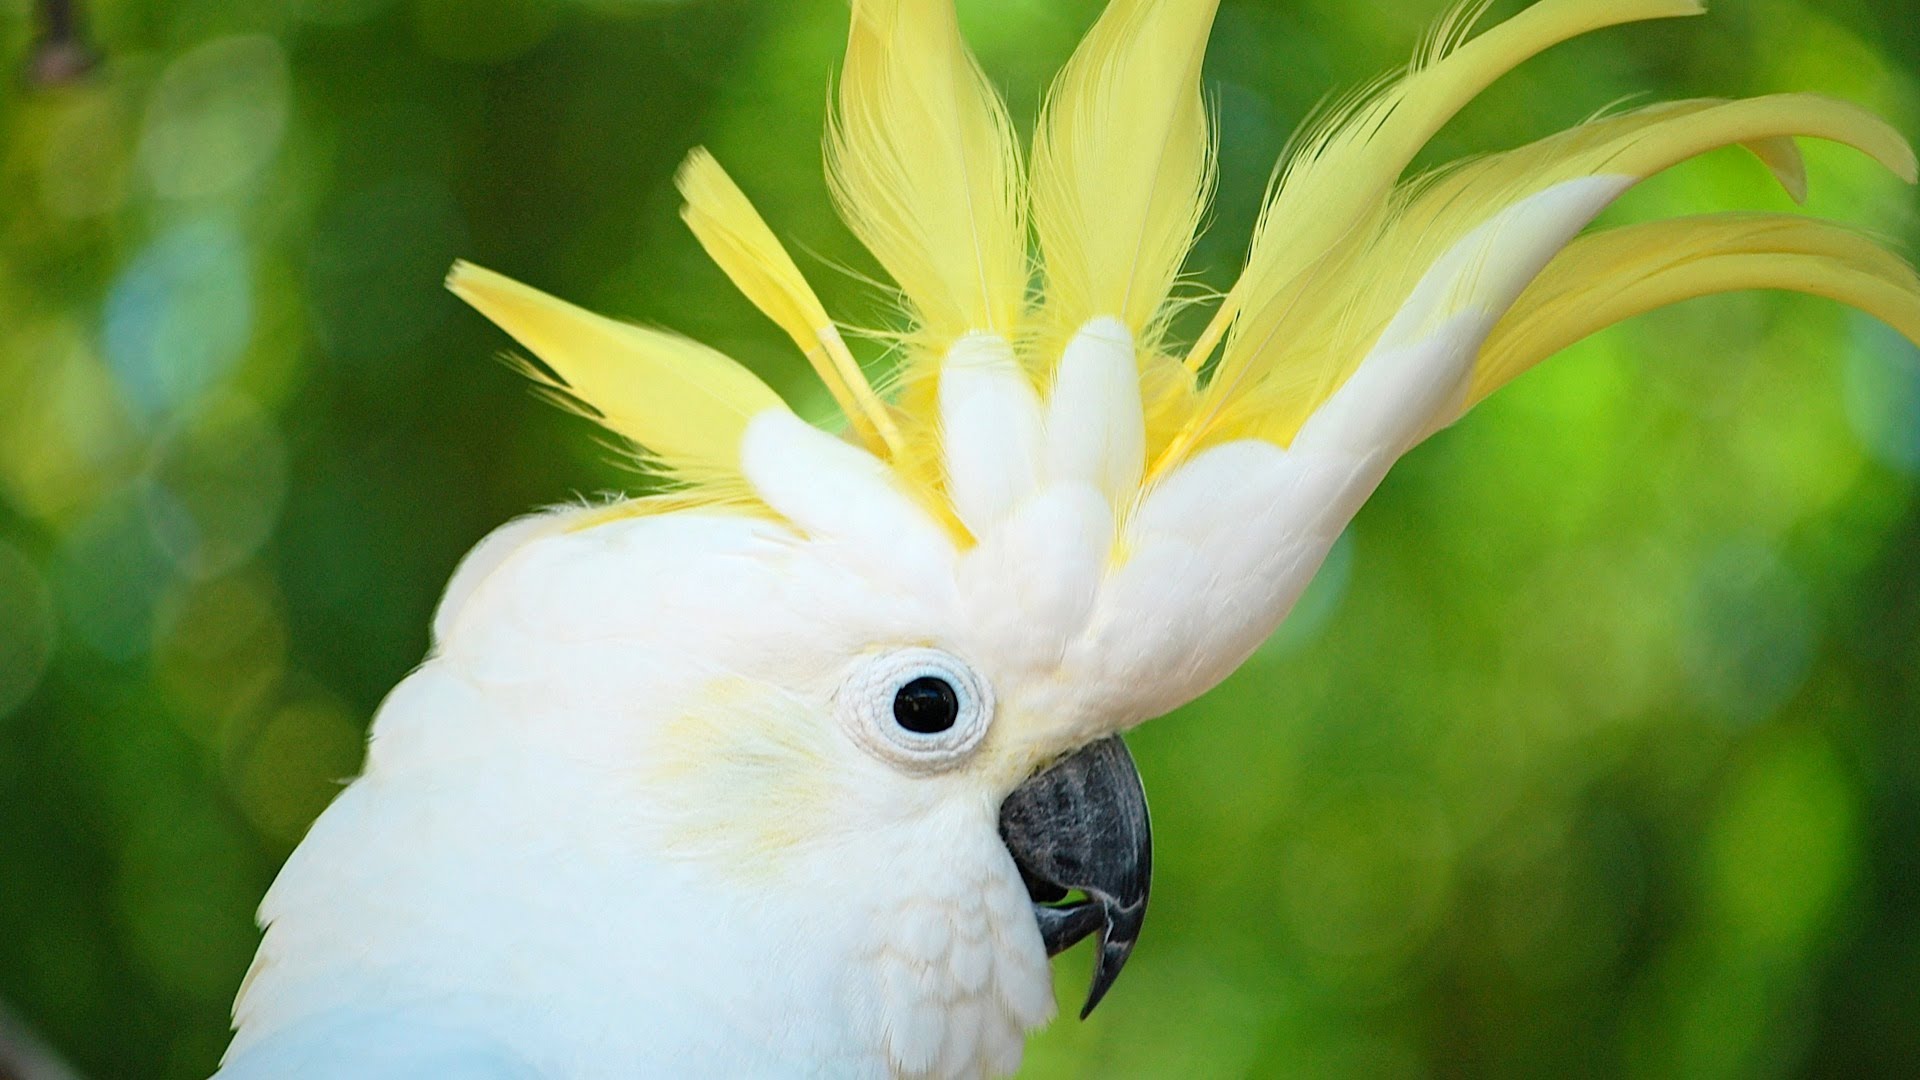 How to Take Care of a Cockatoo | Pet Bird - YouTube